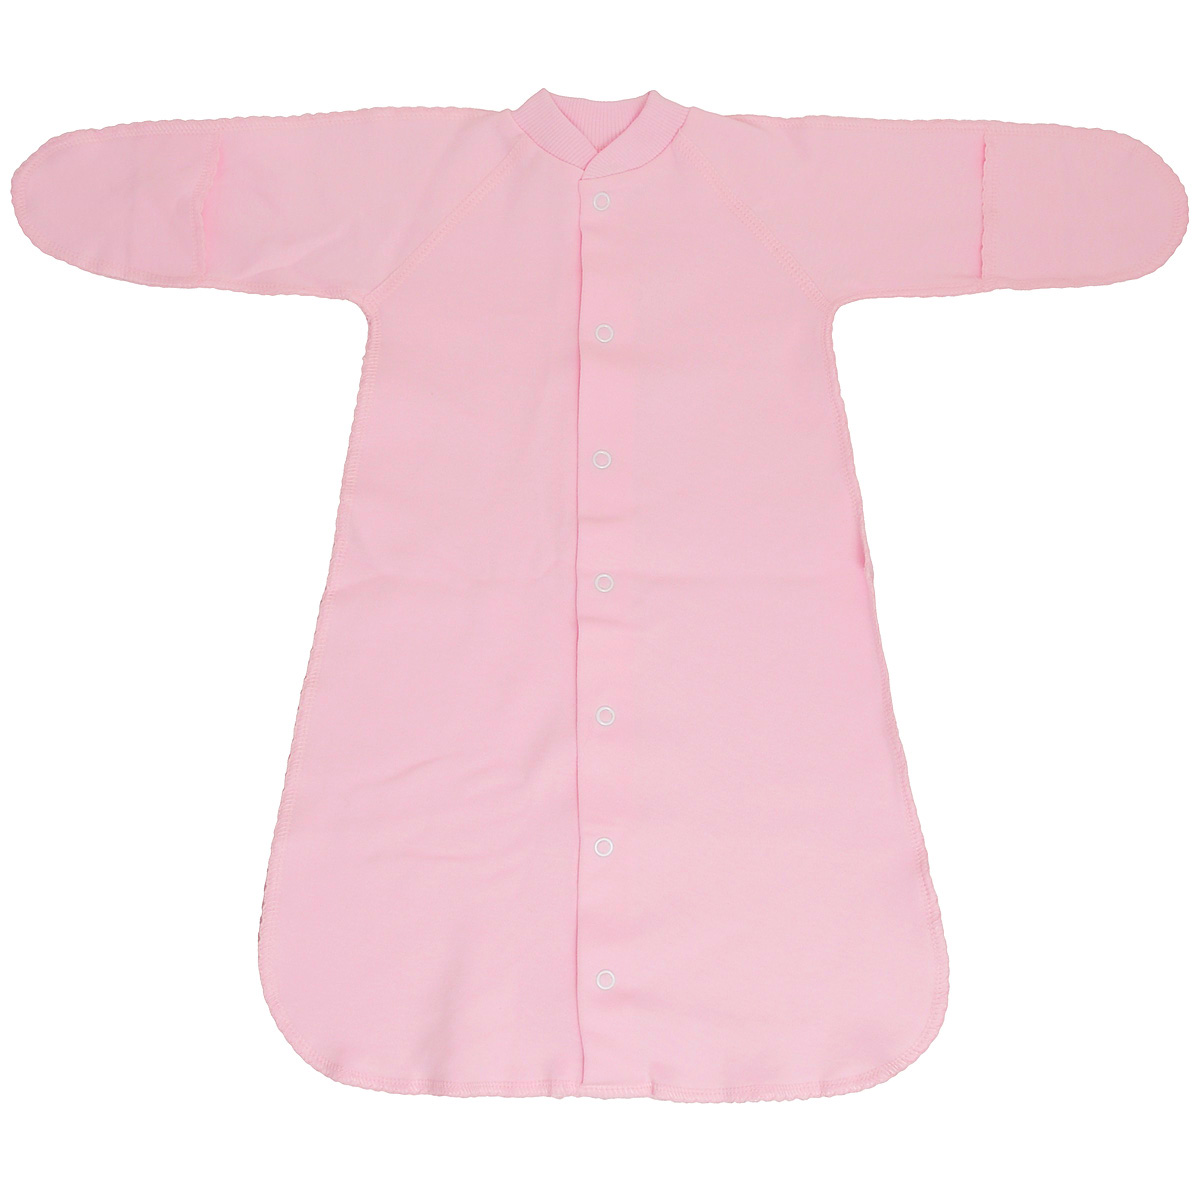 Спальный мешок унисекс Фреш стайл, цвет: розовый. 37-528. Размер 50, 0-1месяц